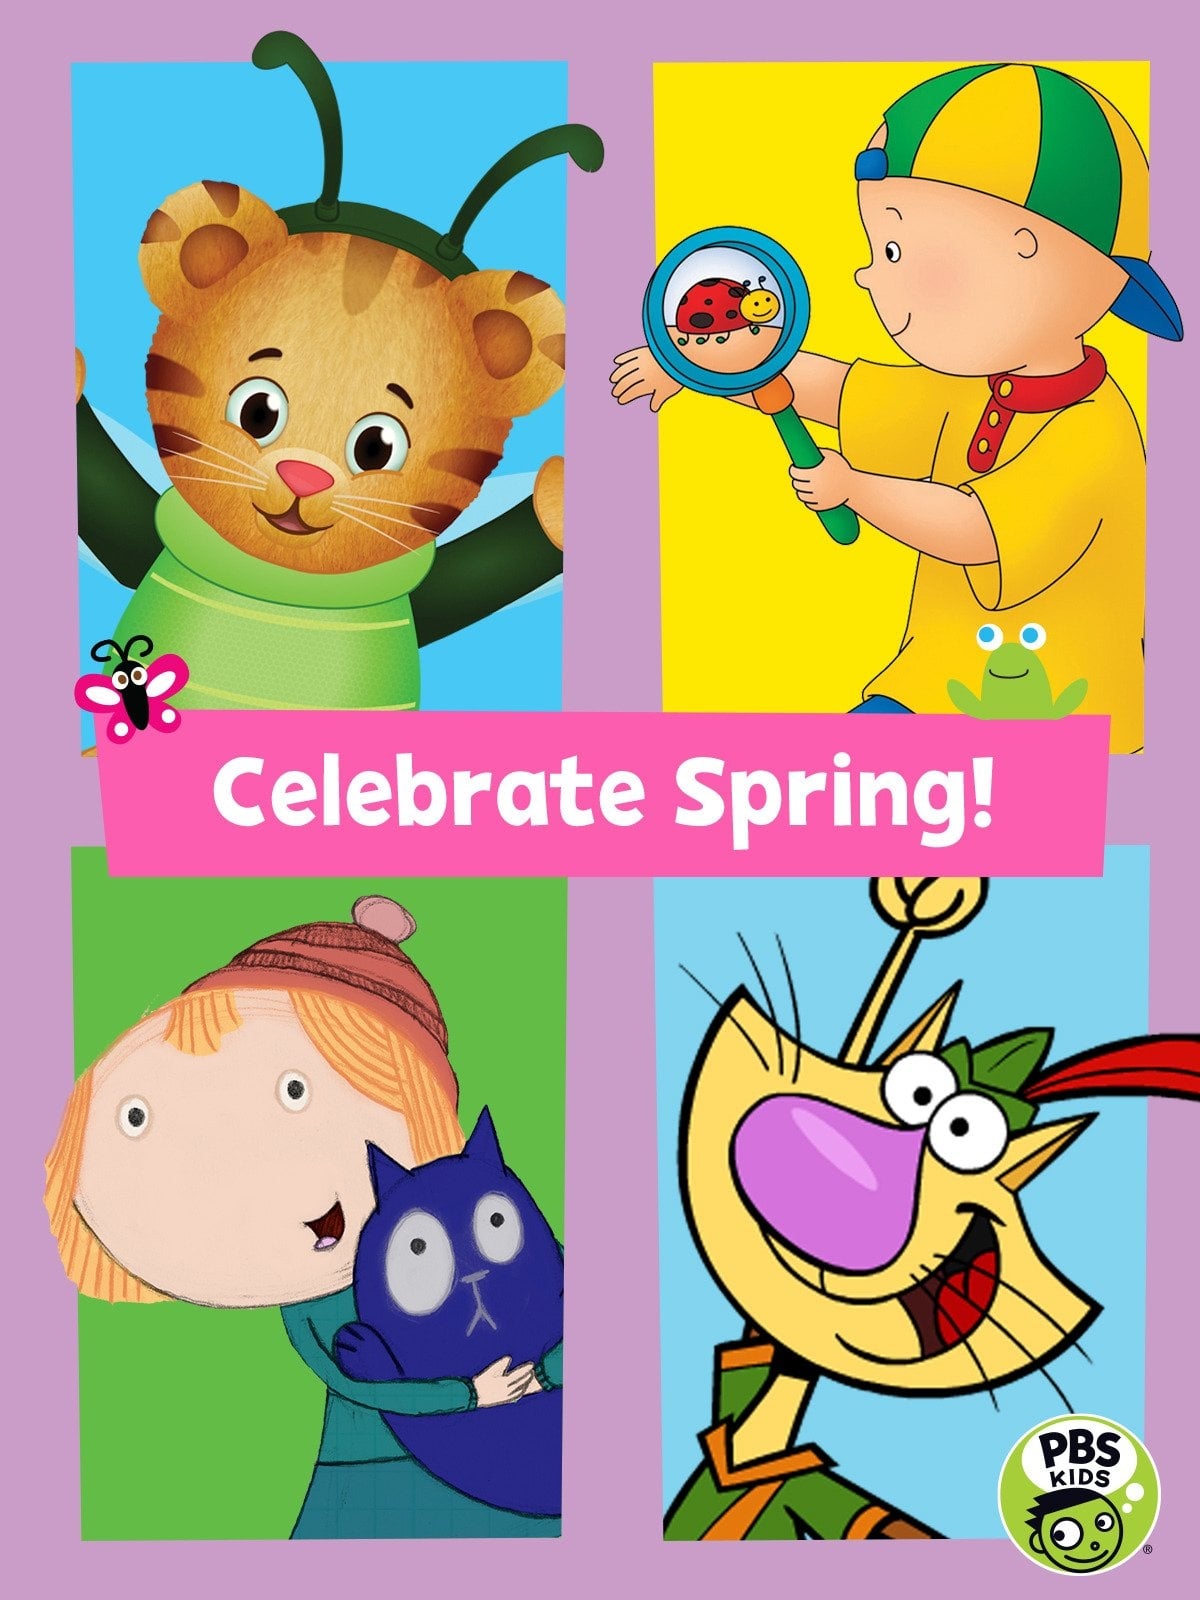 PBS Kids: Celebrate Spring!